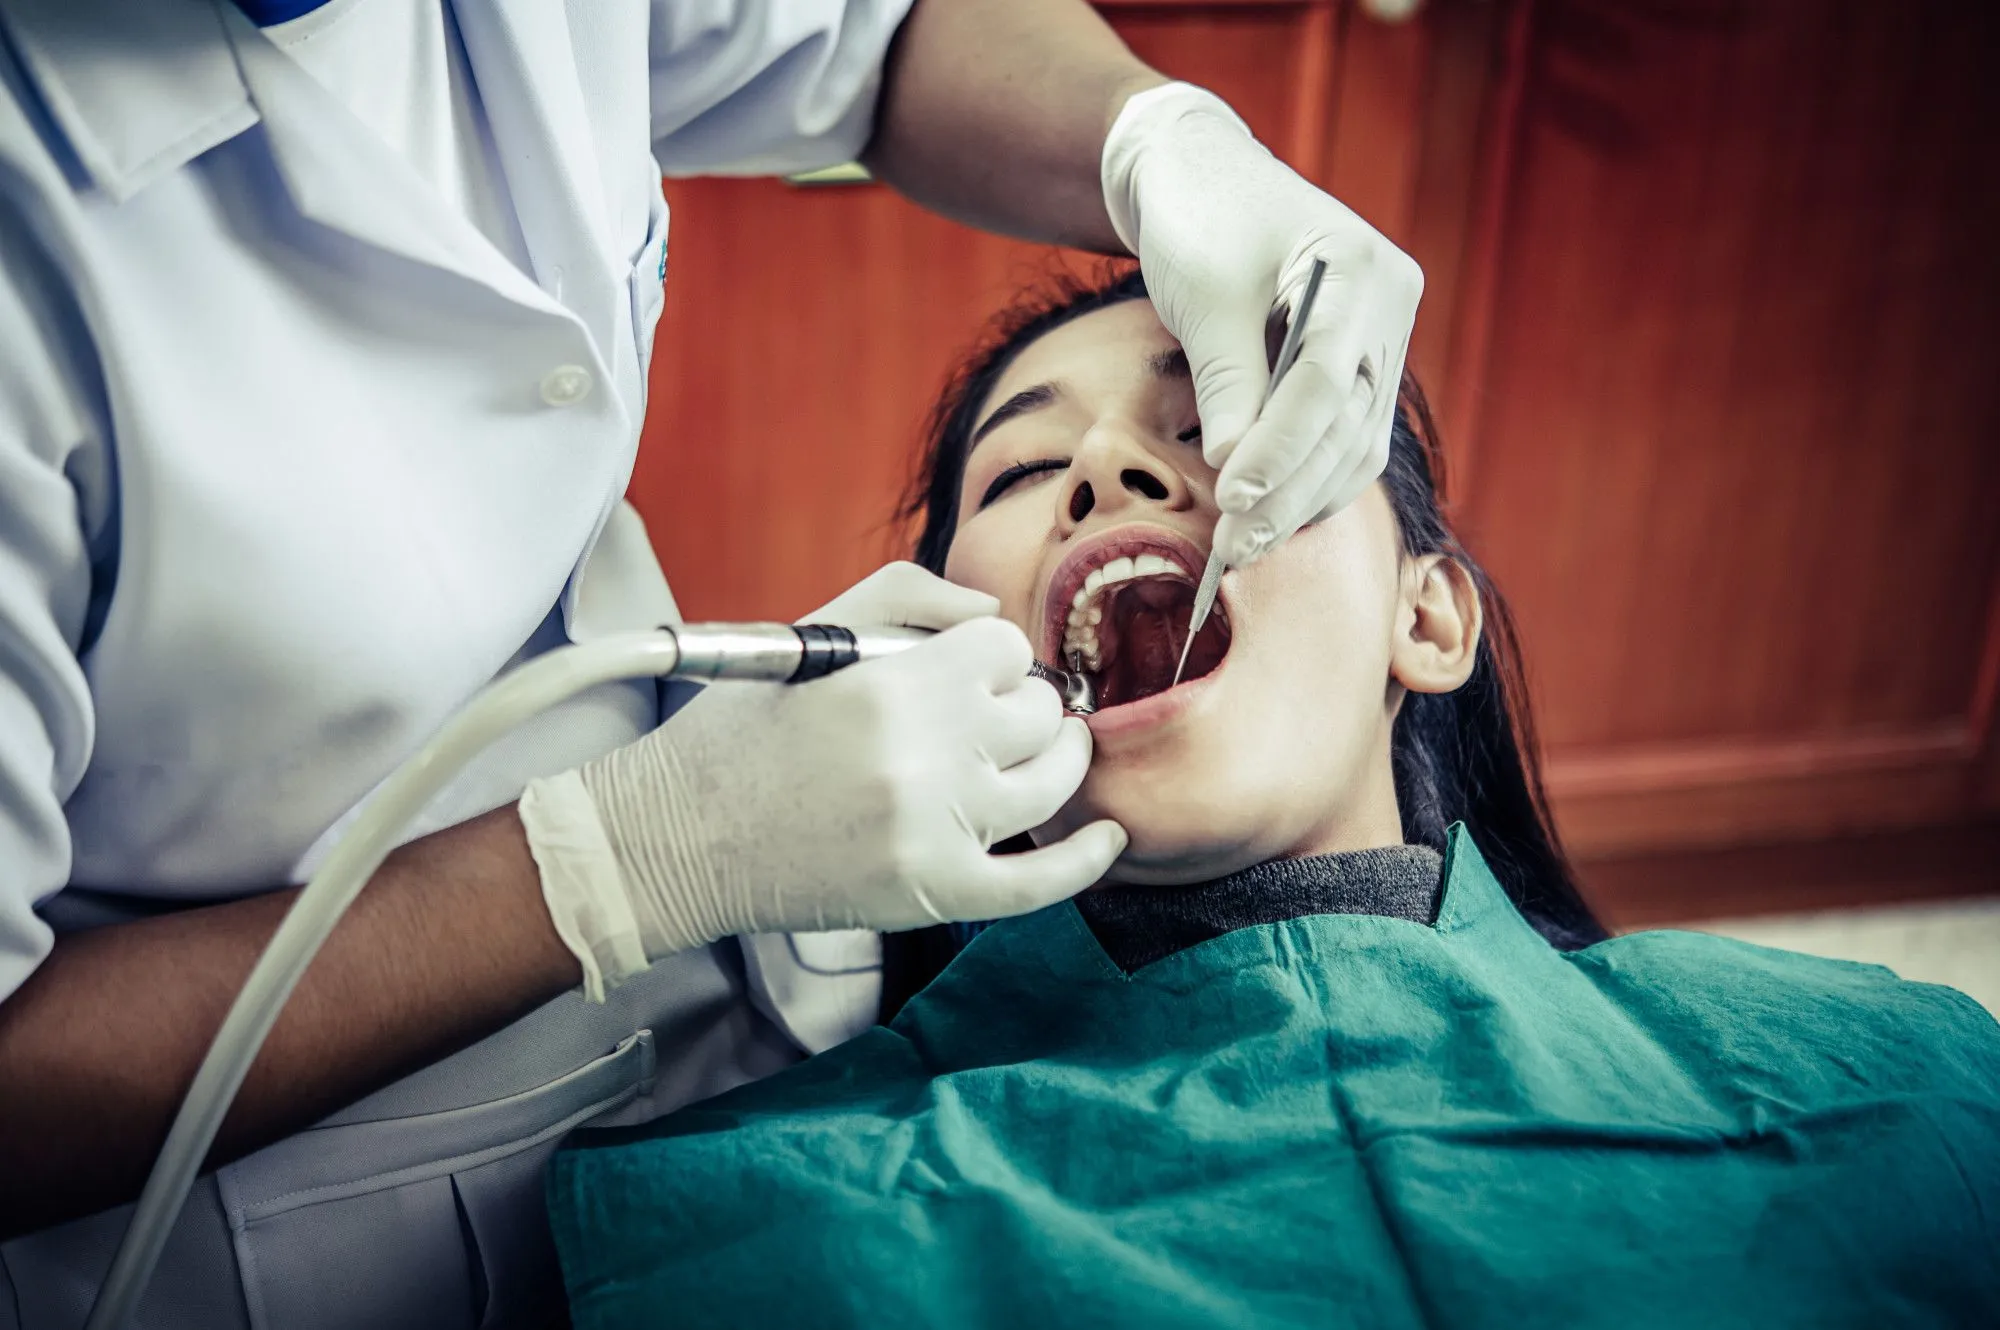 insurance covers dental implants